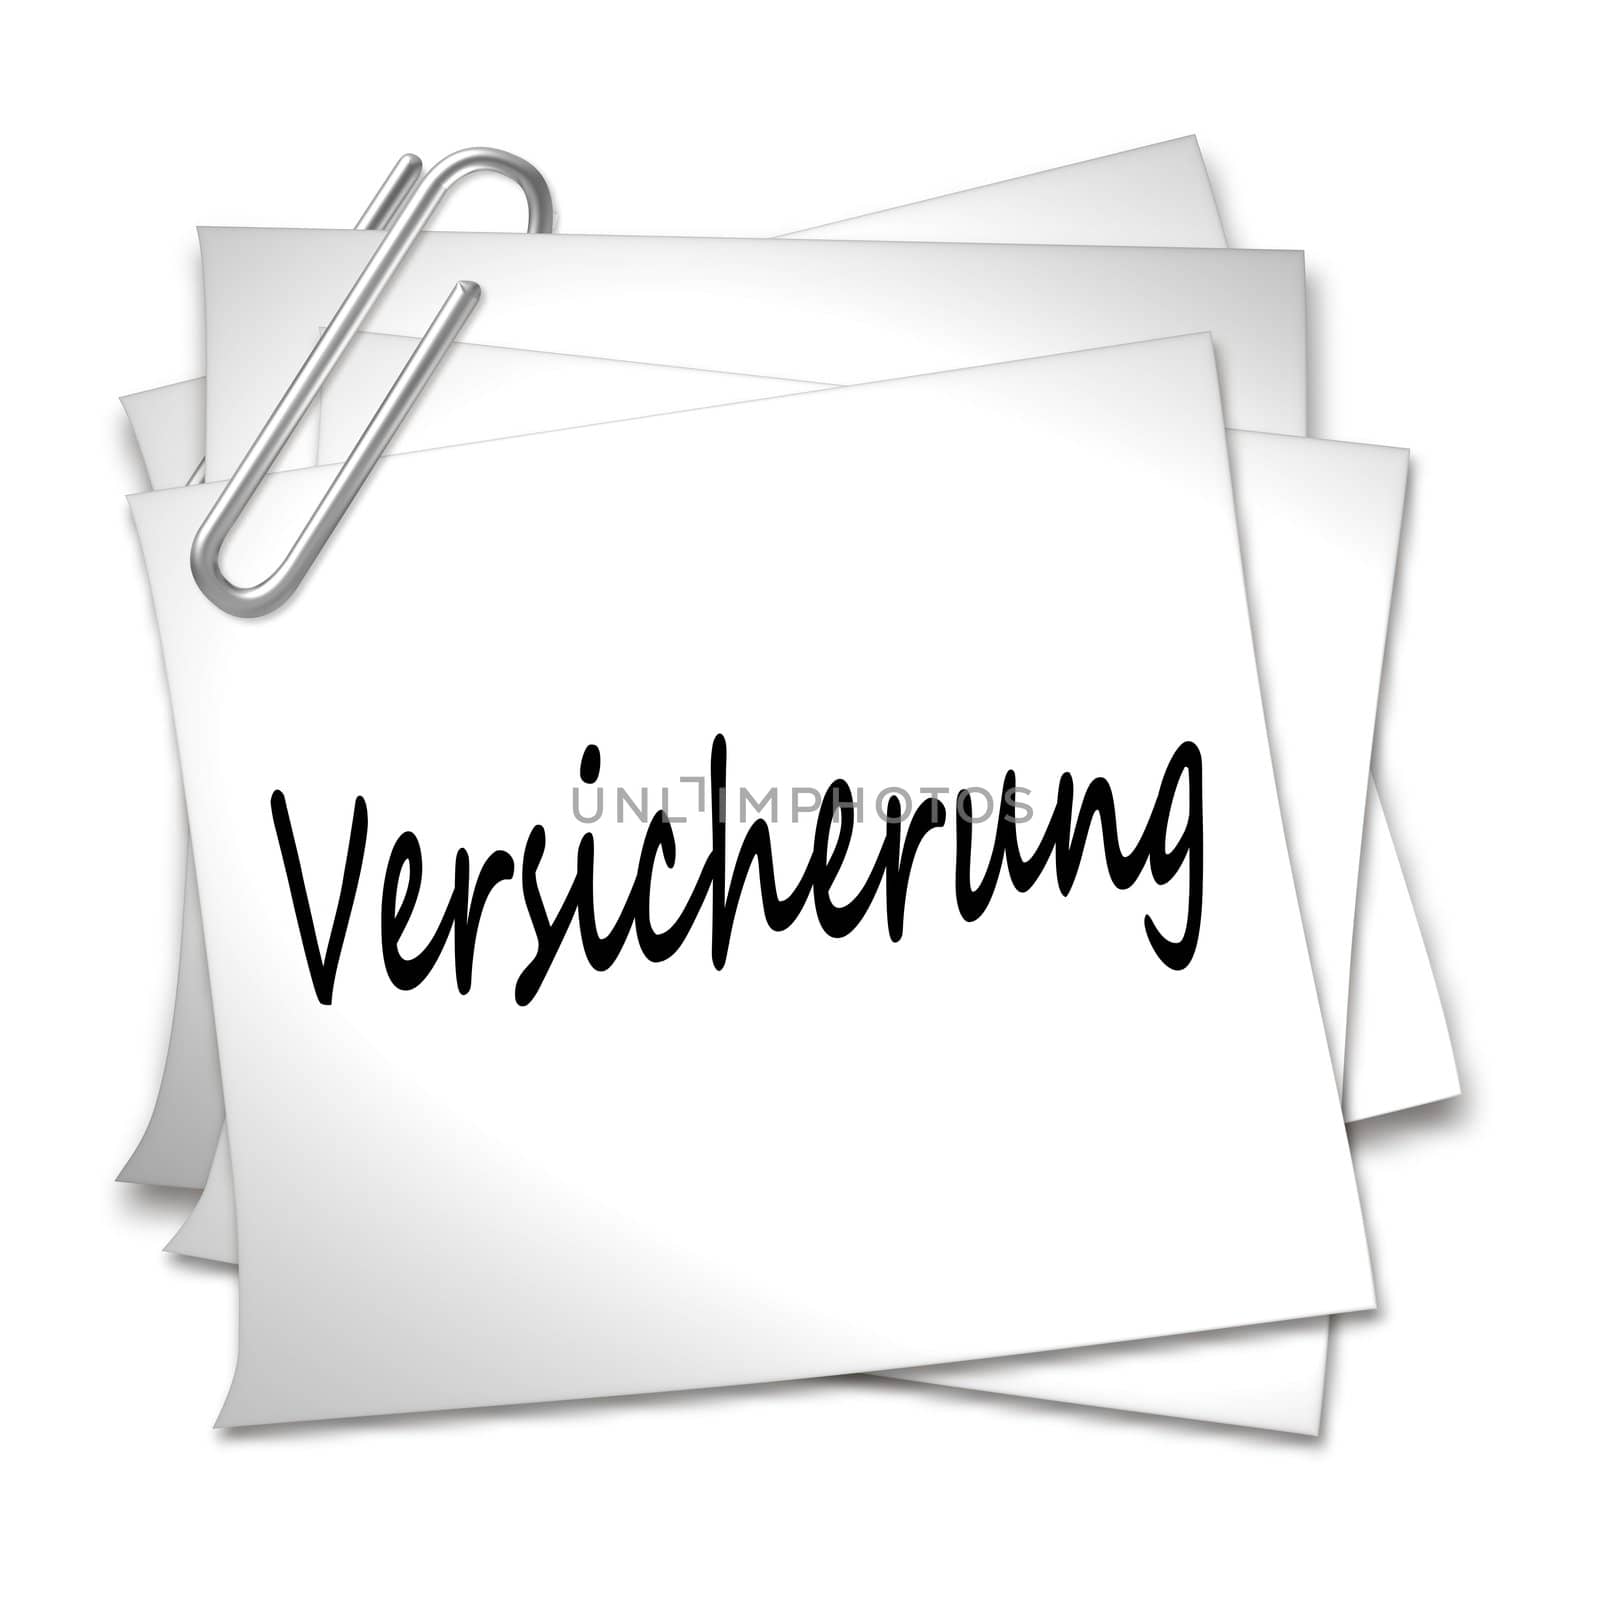 German Memo with Paper Clip - Versicherung by peromarketing